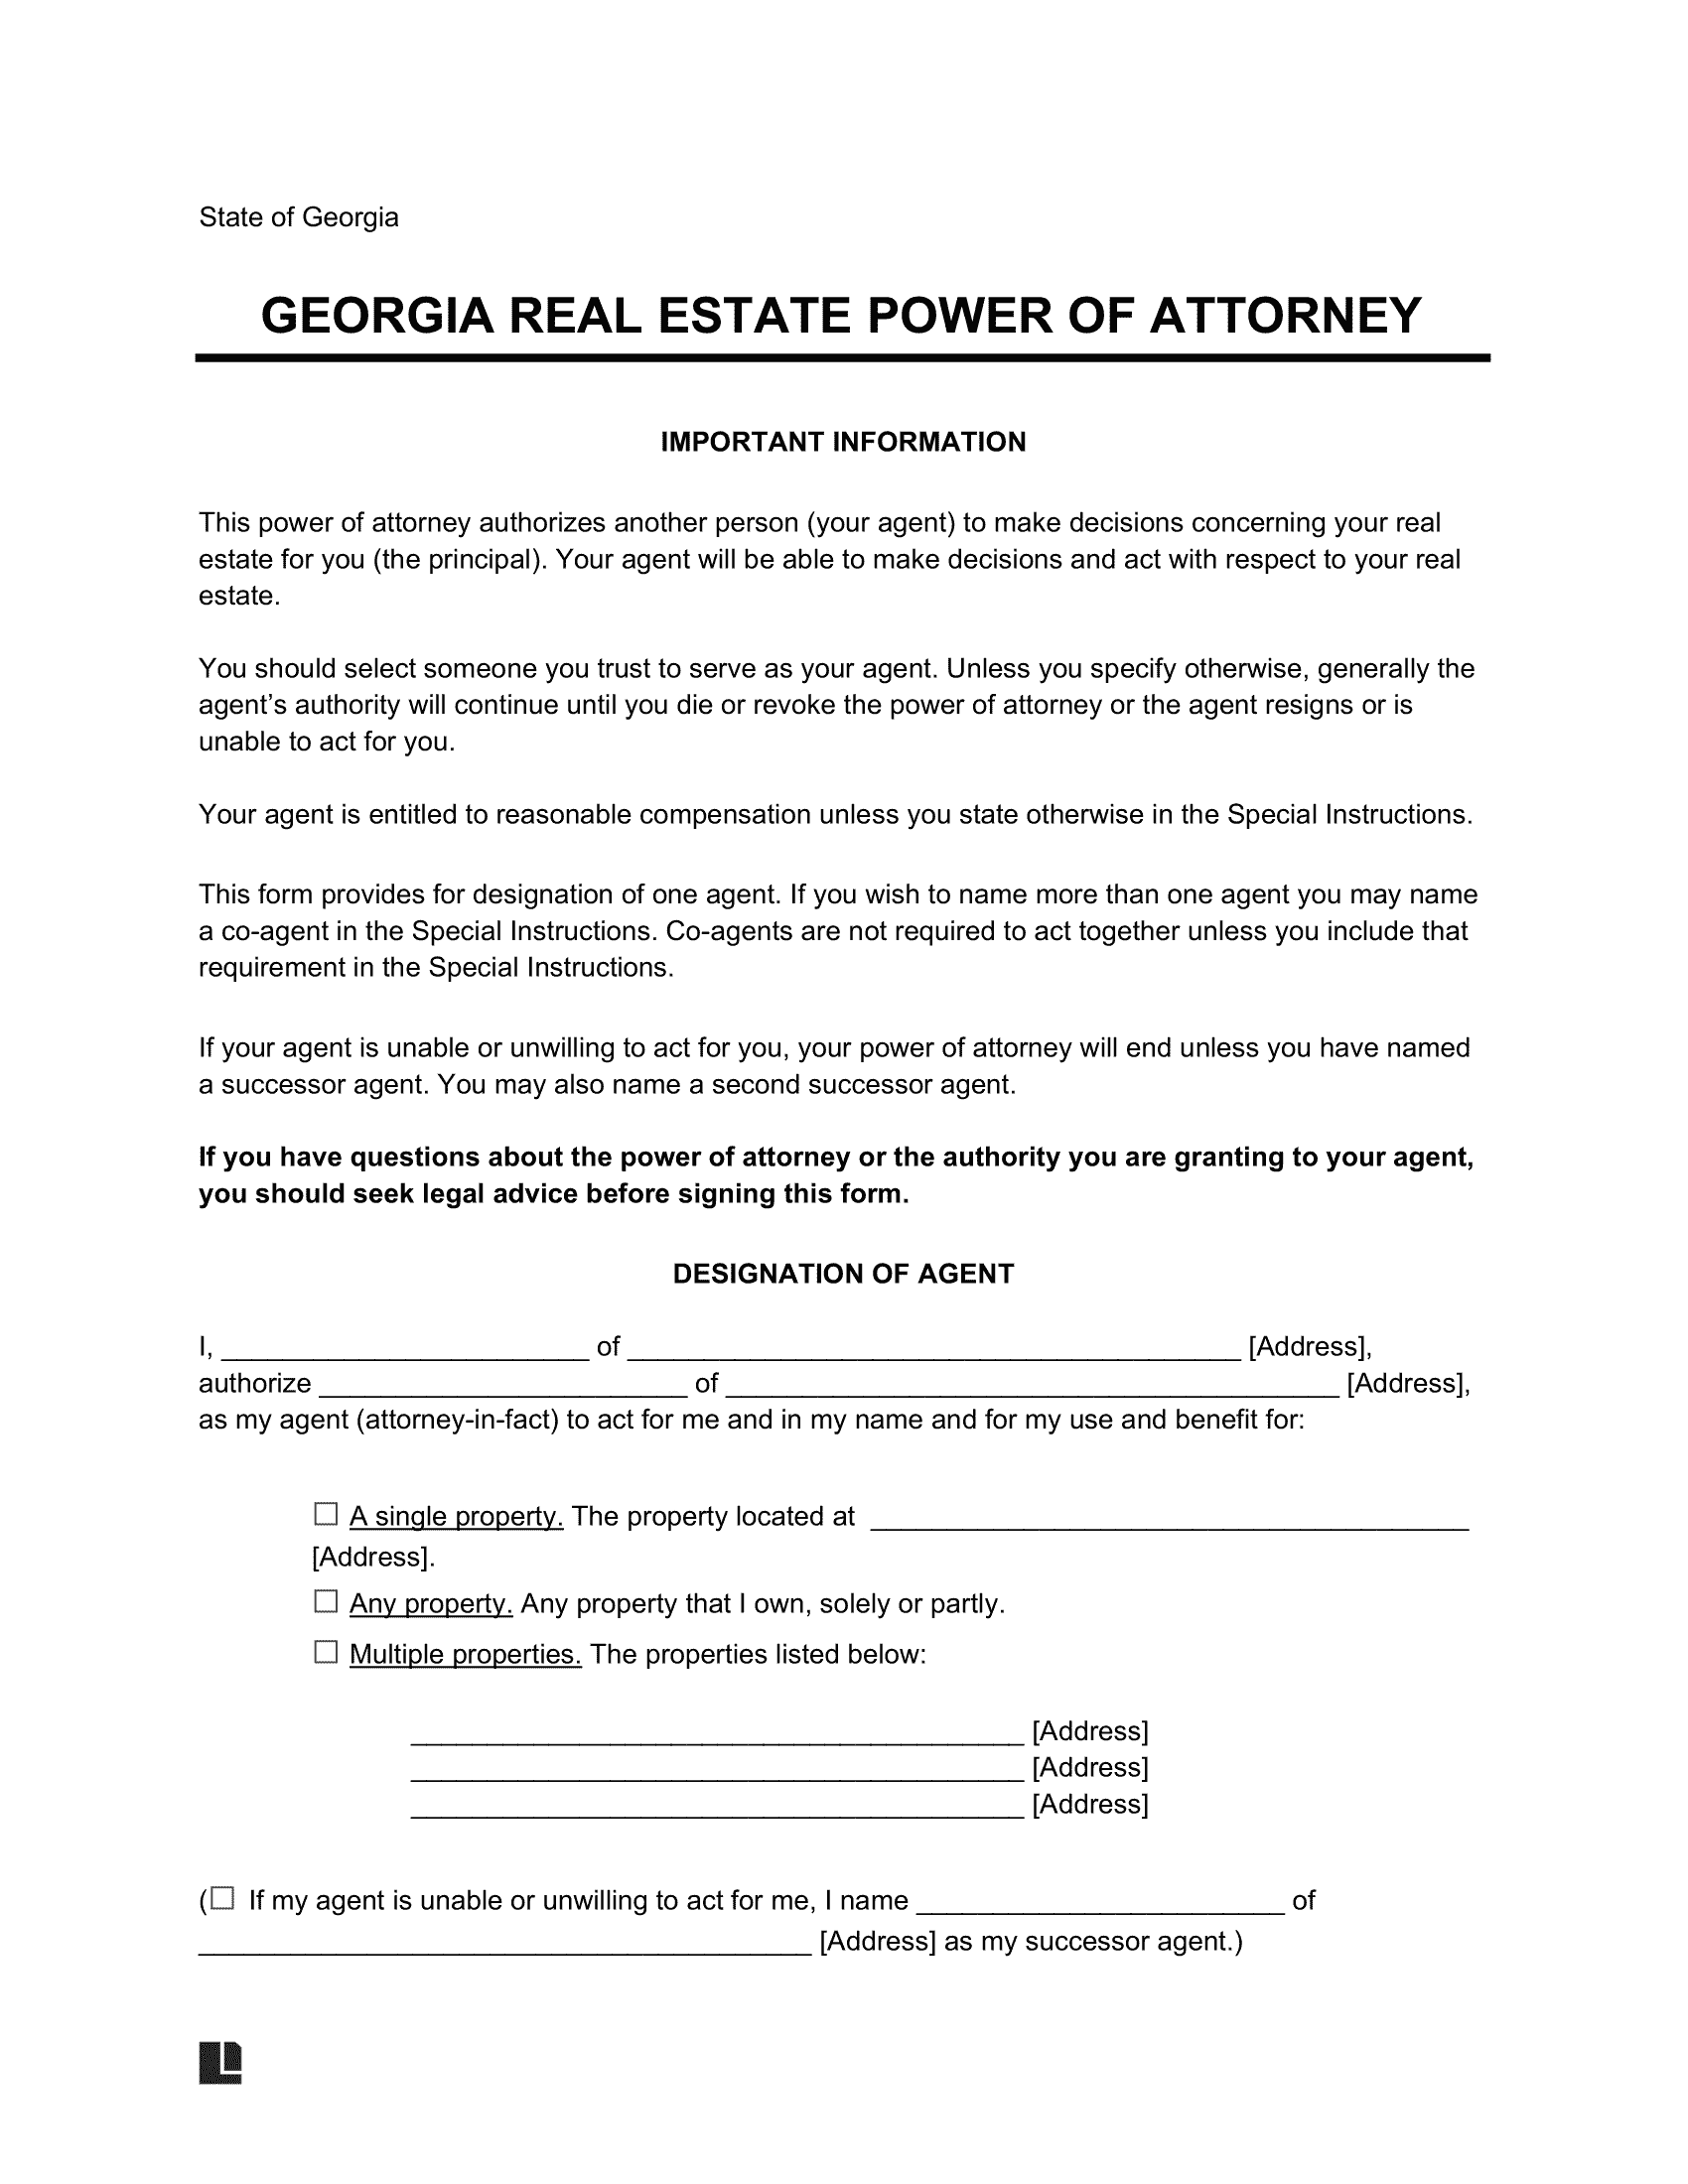 Georgia Real Estate Power of Attorney Form